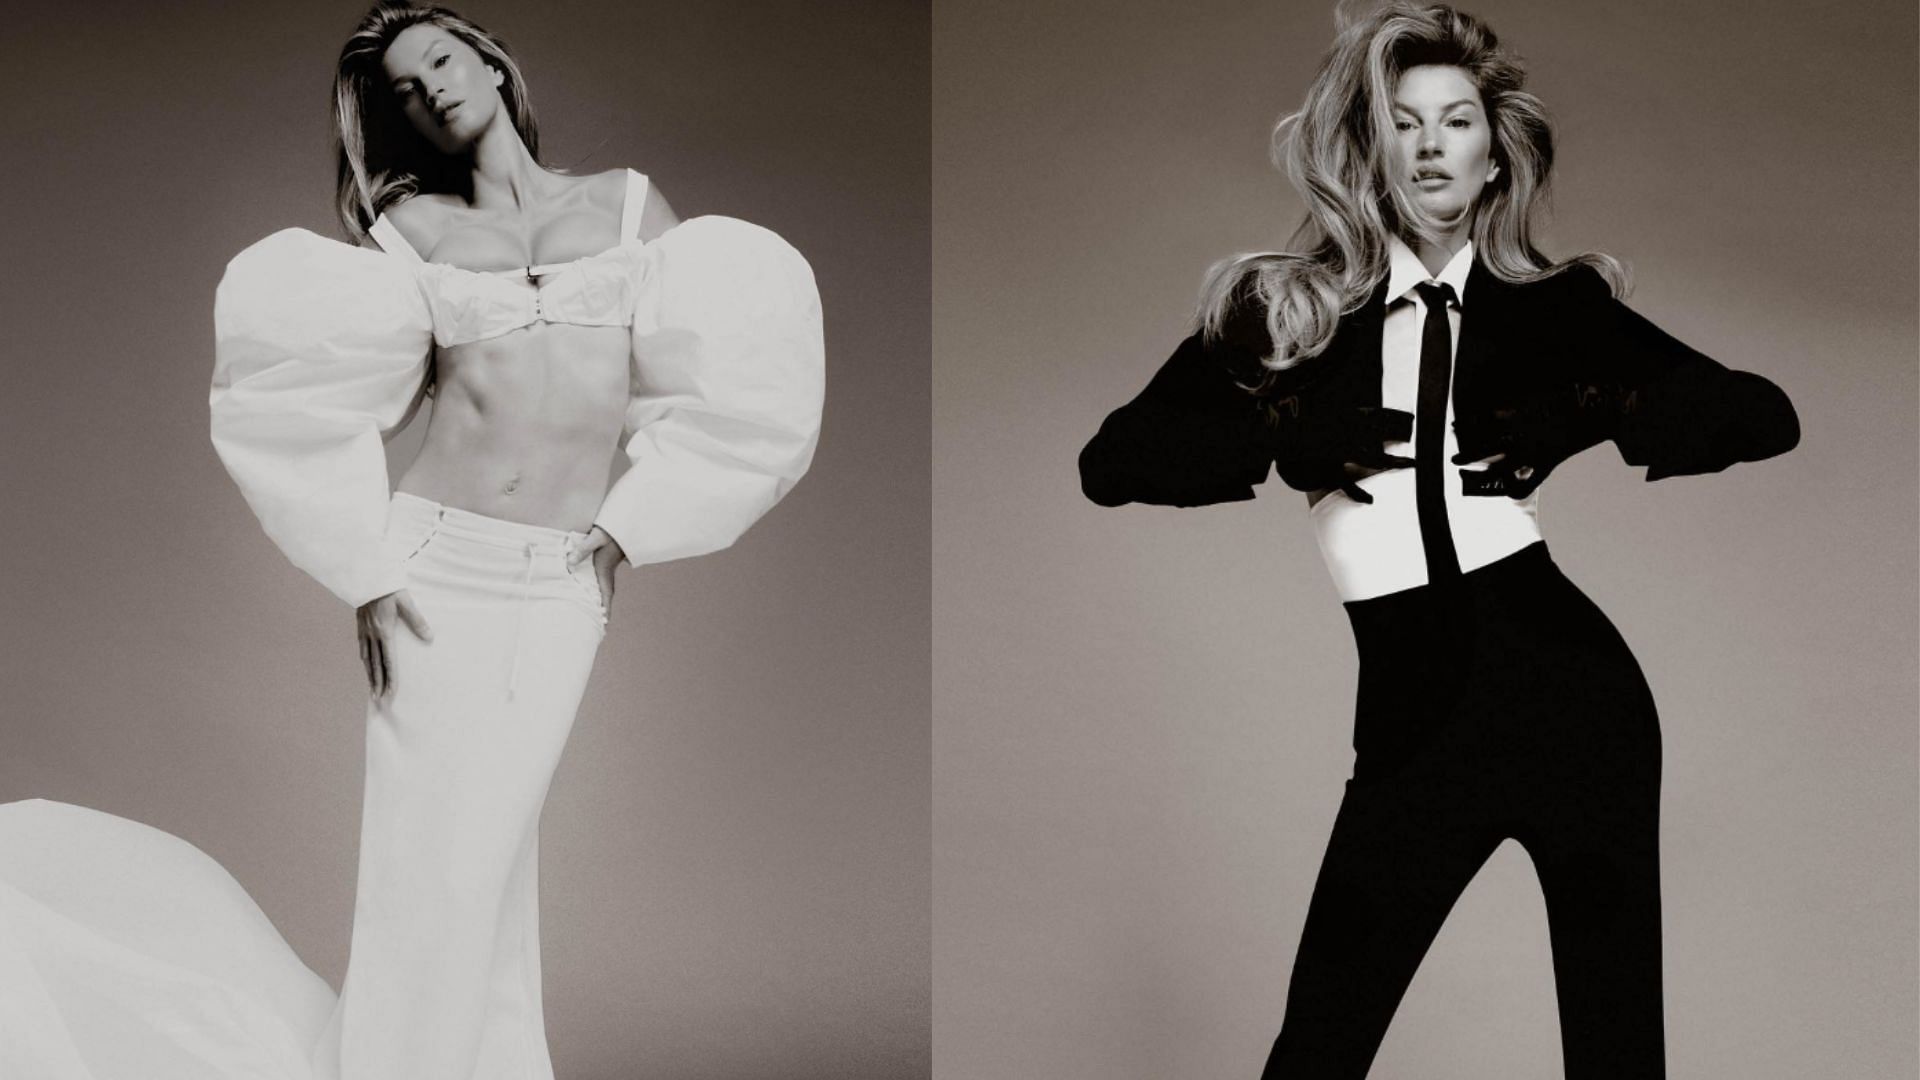 Supermodel Gisele Bundchen stuns in Vogue Brazil photo shoot